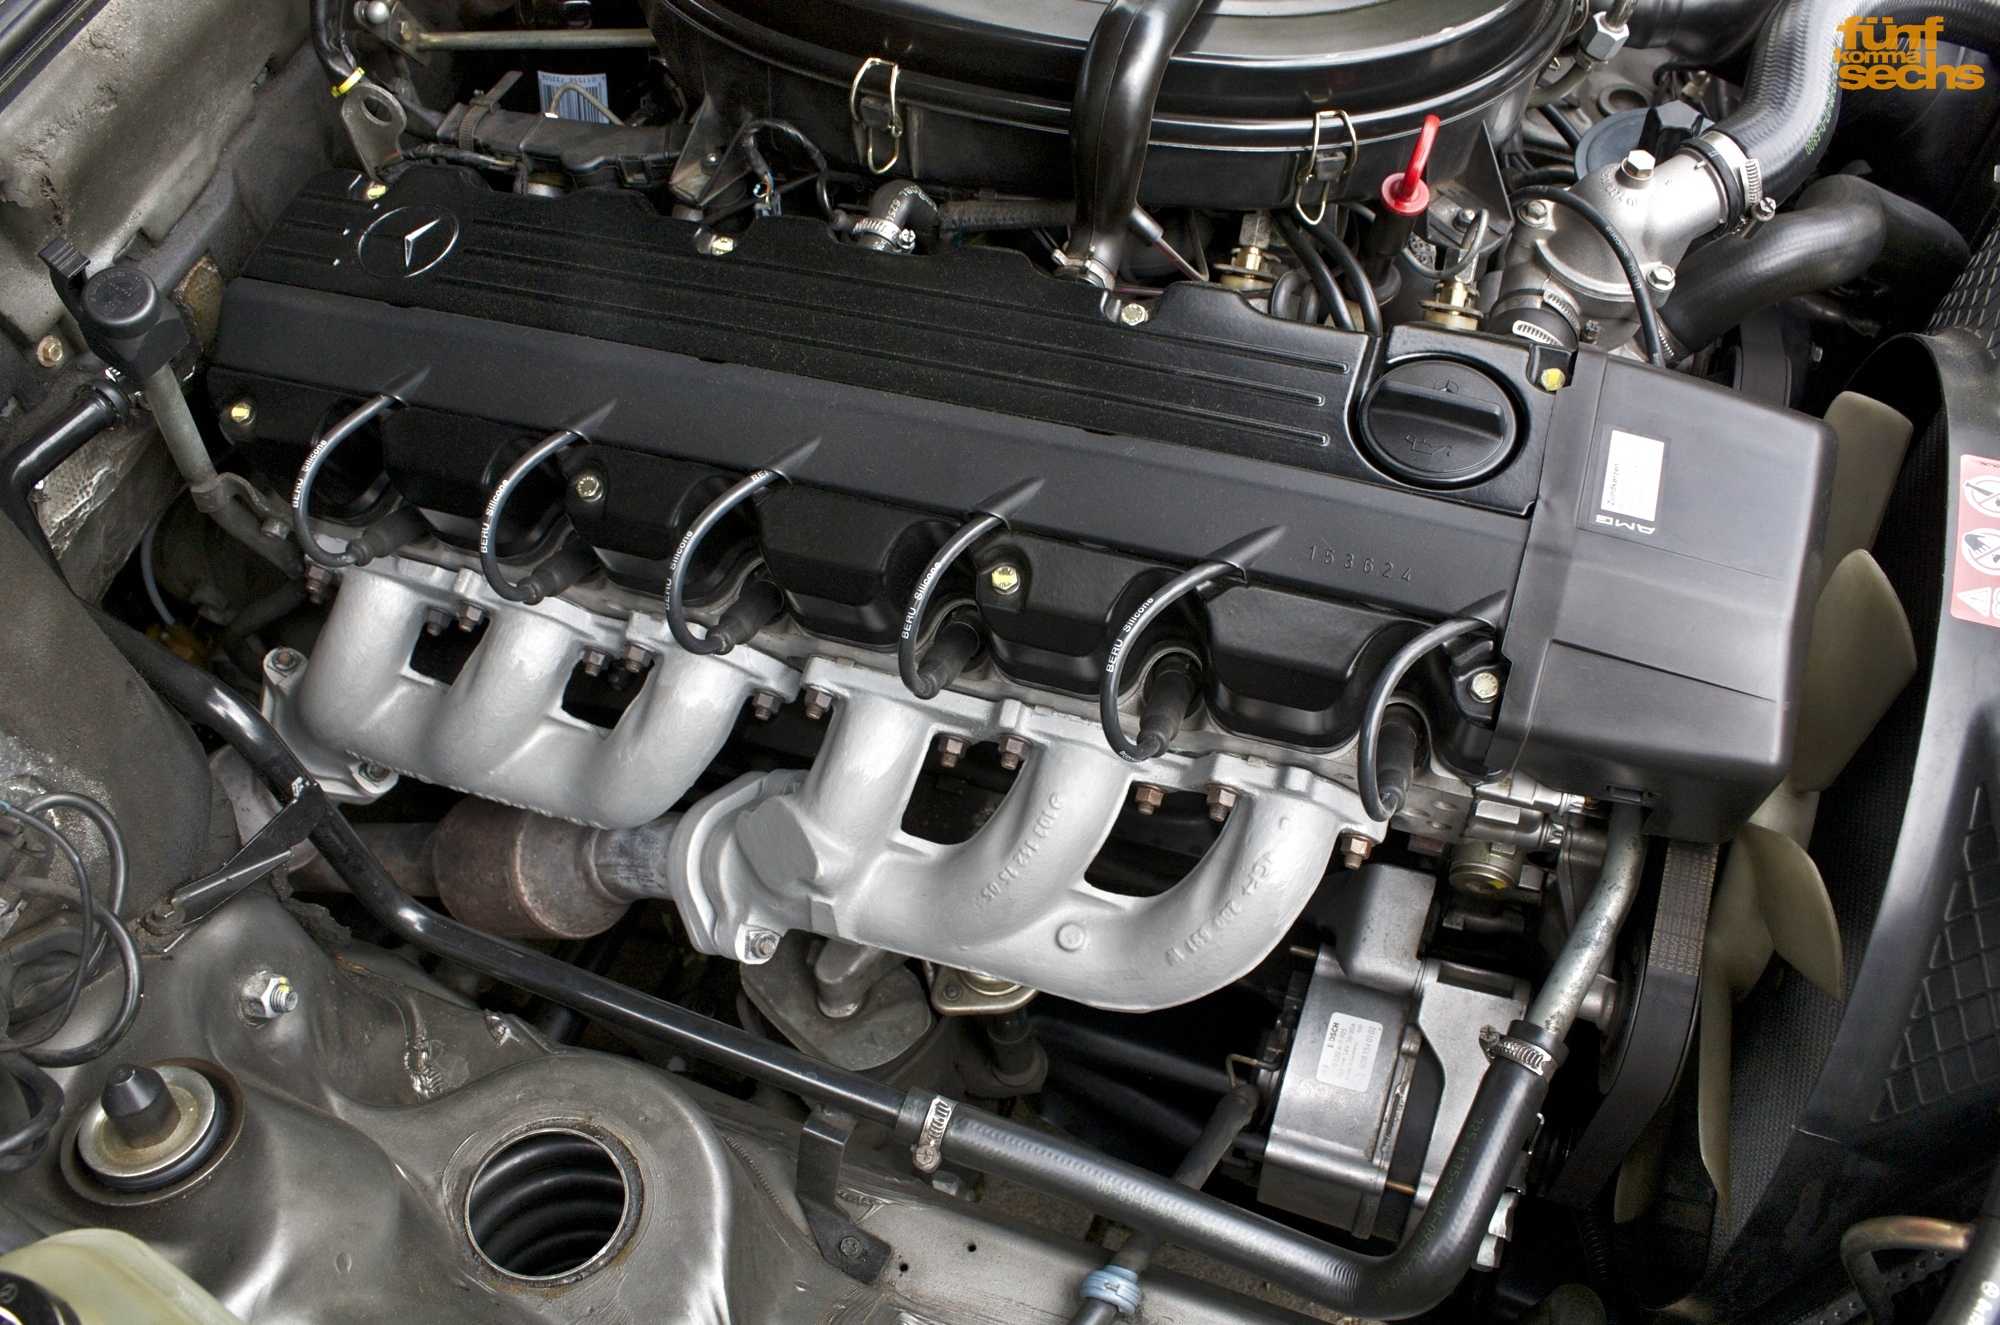 Двигатель m156 mercedes-benz: обзор и характеристики